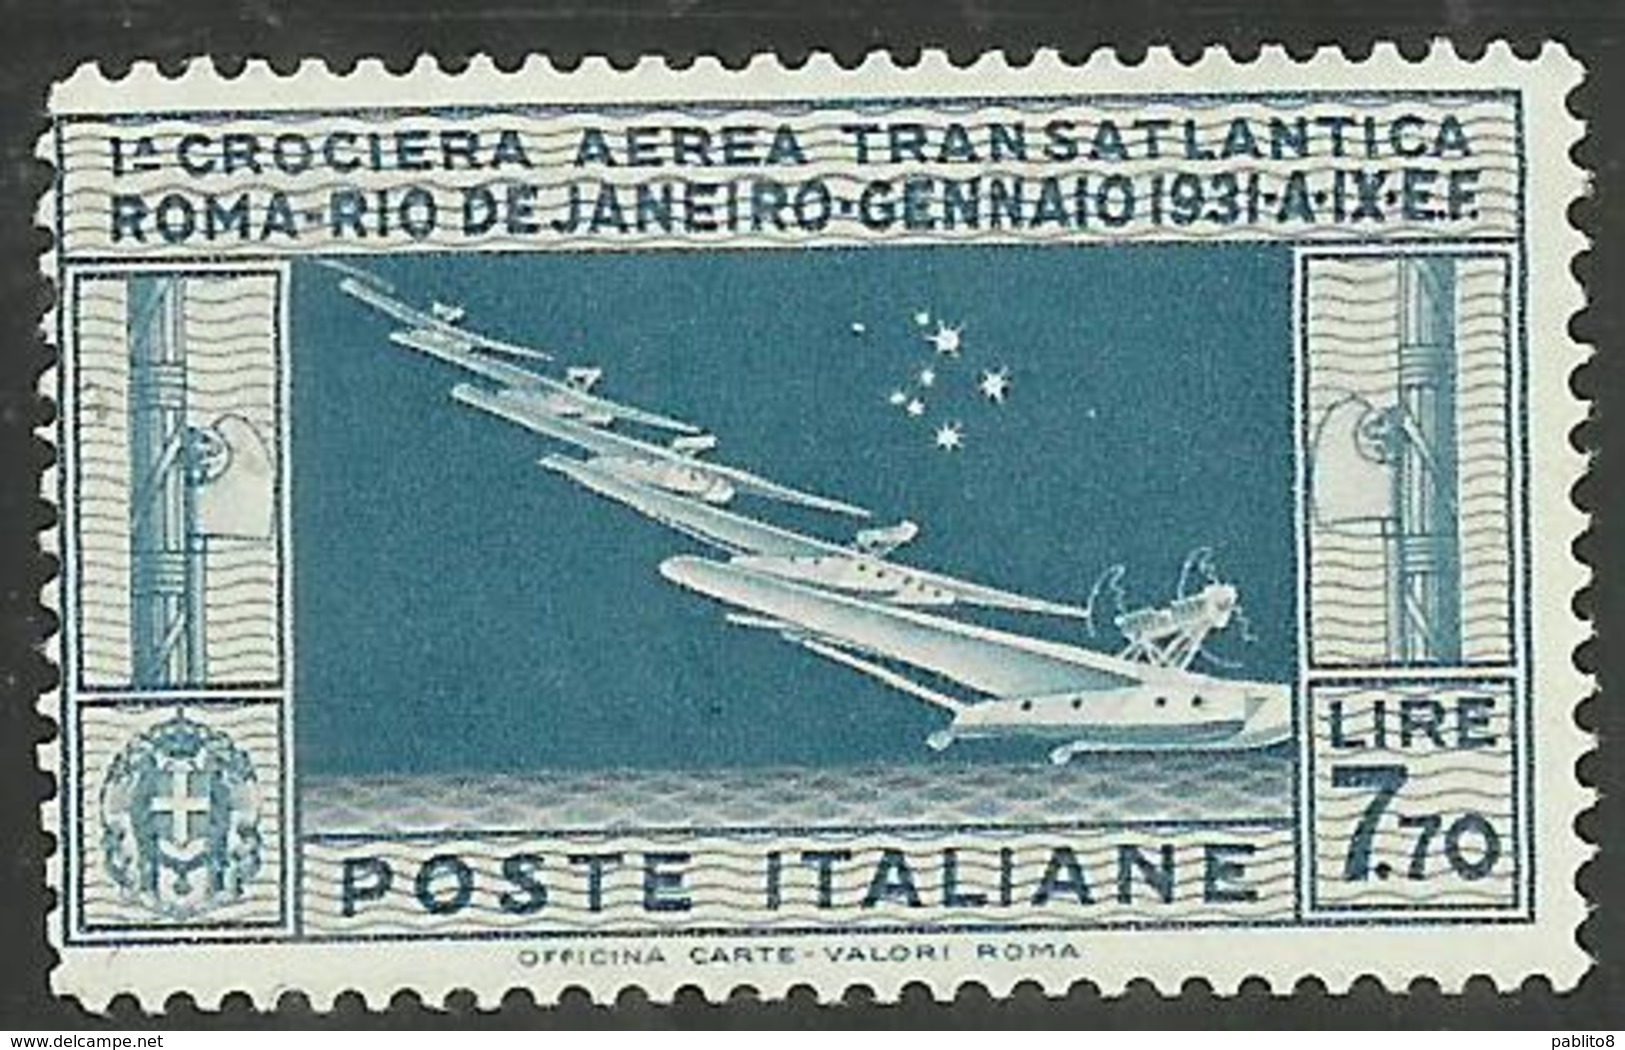 ITALIA REGNO ITALY KINGDOM 1930 VARIETA' 7 STELLE STARS VARIETY POSTA AEREA AIR MAIL CROCIERA BALBO 7,70 MNH CERTIFICATO - Posta Aerea